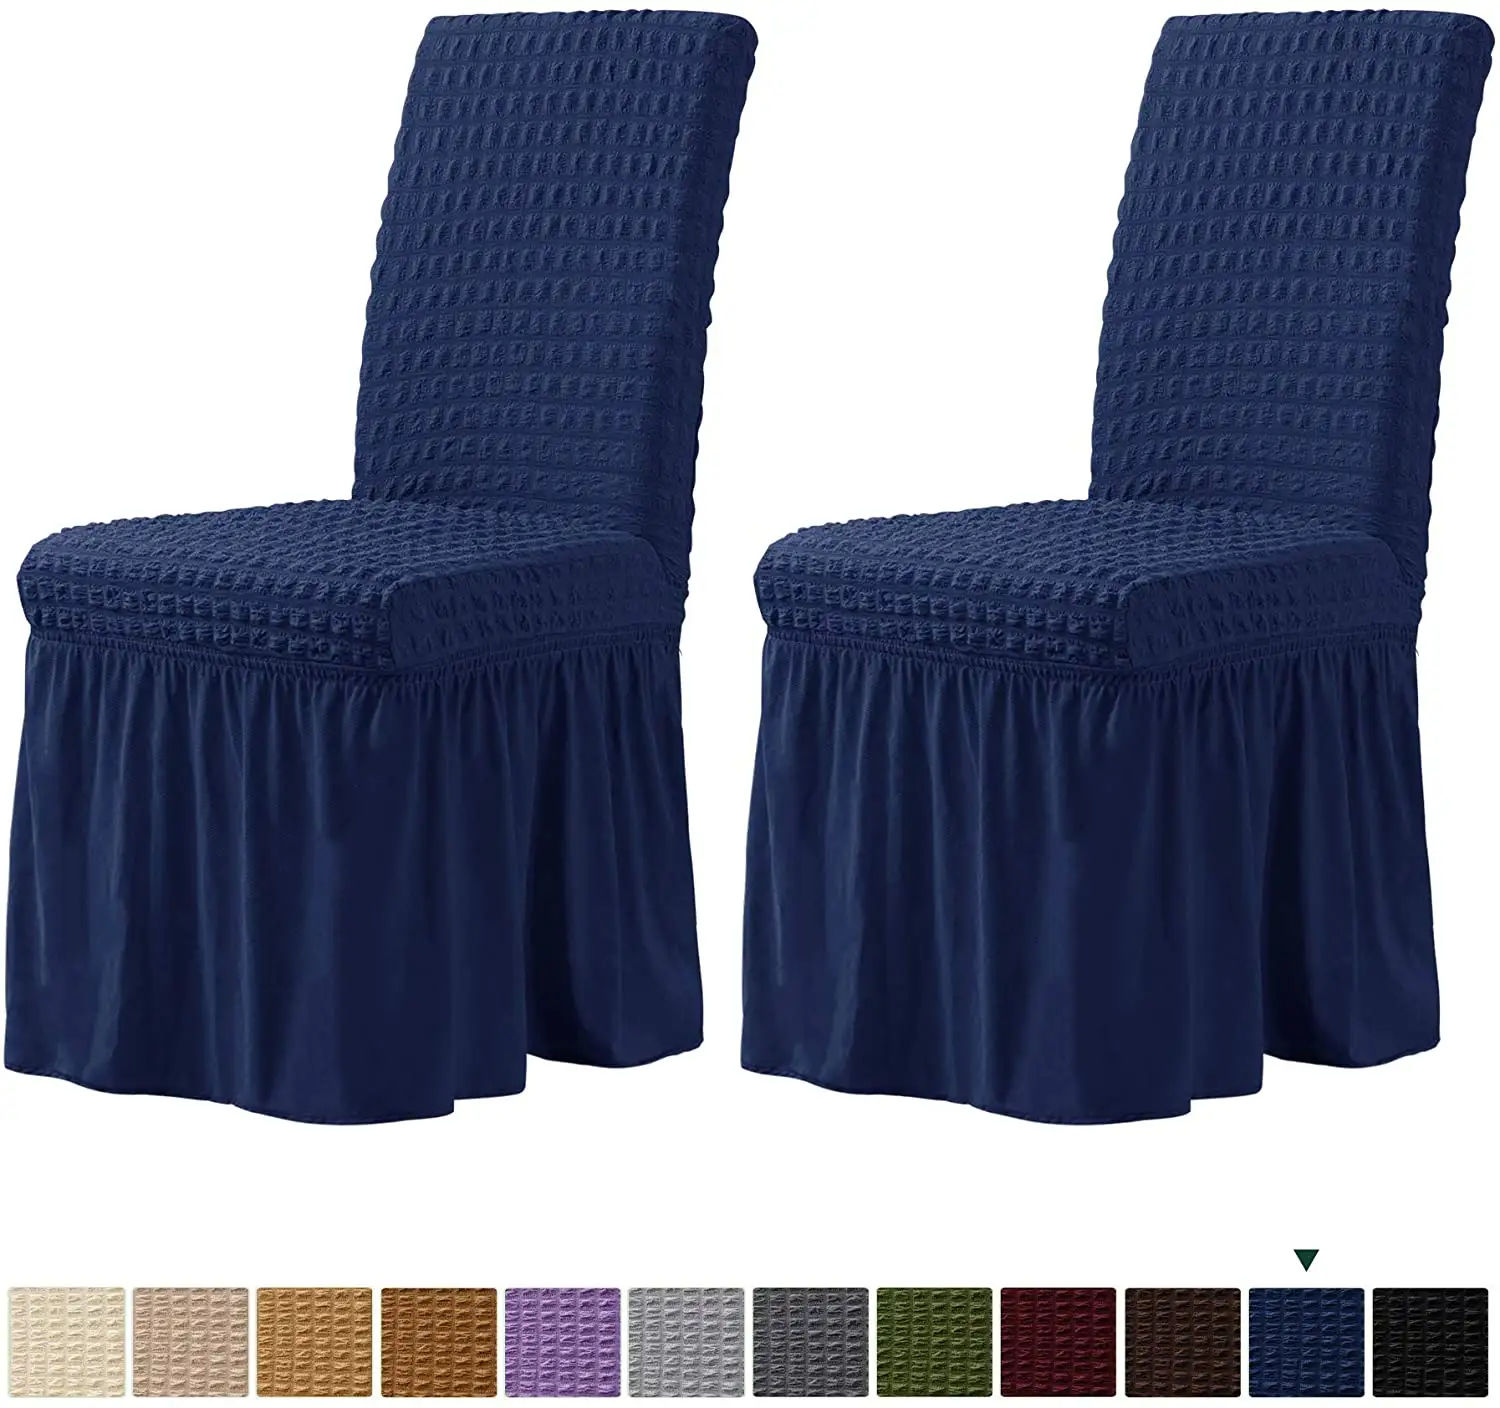 Cobertura para cadeira amazon, venda quente, universal, fácil de jantar, capas para cadeiras